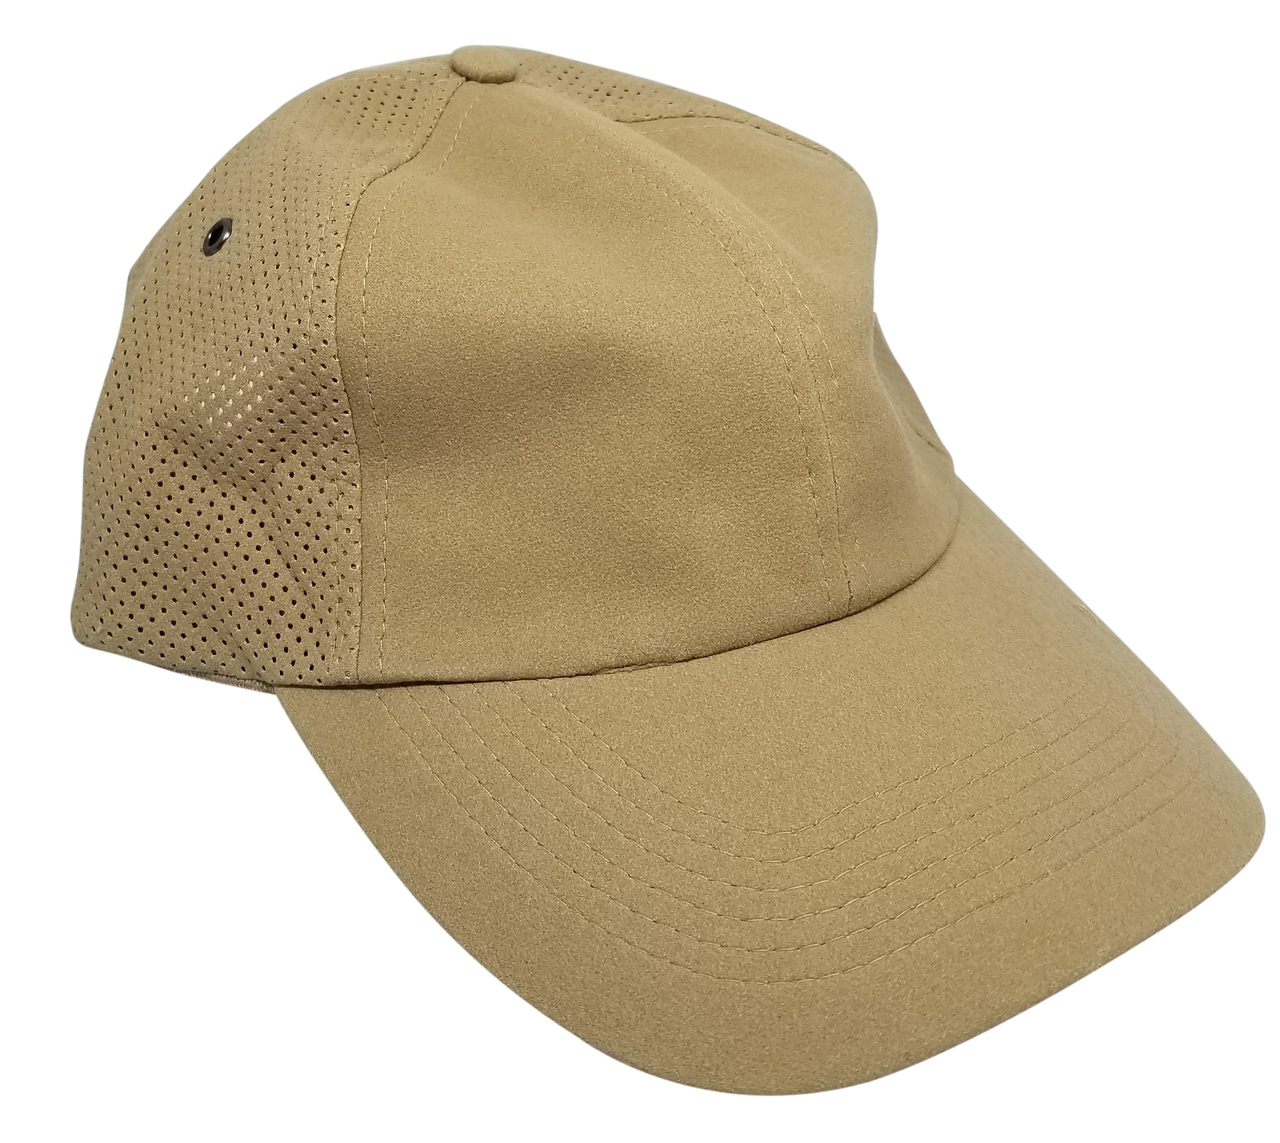 Aussie Chiller: Perforated Cooling Baseball Cap – Blond (light tan)